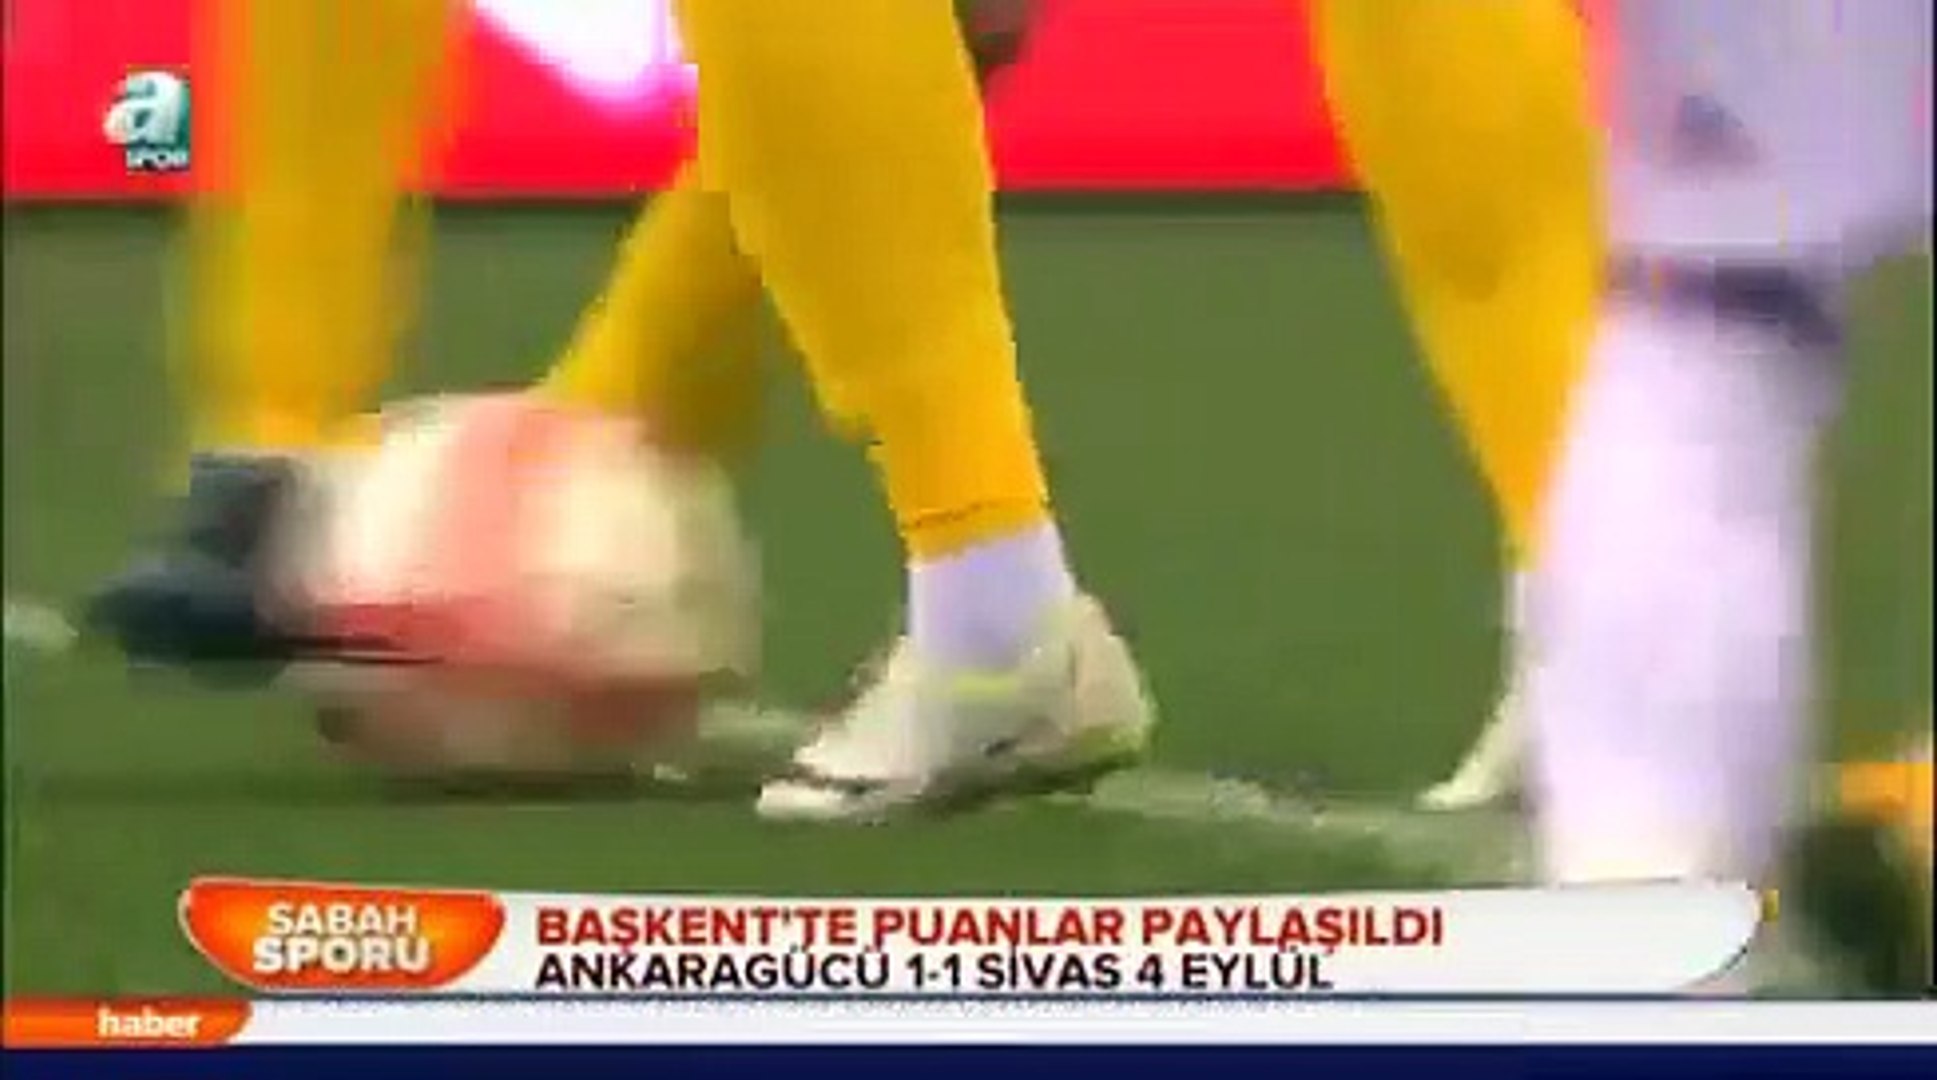 Ankaragücü 1-1 Sivas 4 Eylül Belediyespor 18.12.2014 - 2014-2015 Turkish  Cup Group D Matchday 2 - Dailymotion Video